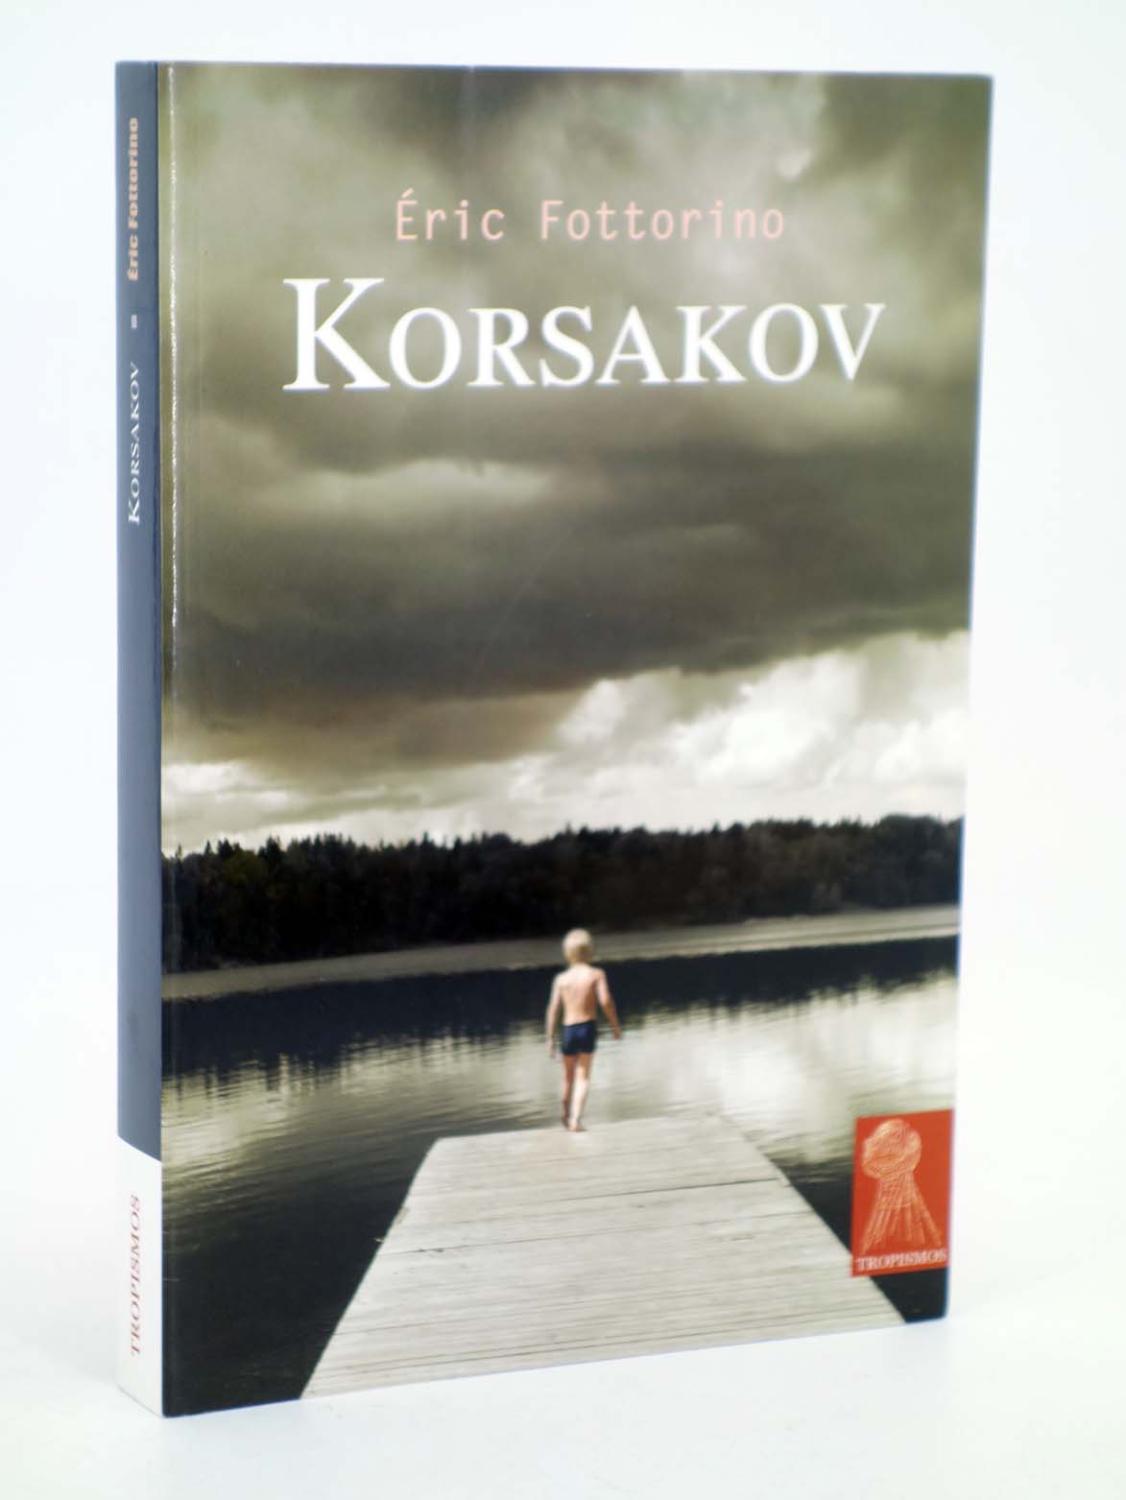 TROPISMOS KORSAKOV (Eric Fottorino) Témpora, 2006. OFRT antes 18E - Eric Fottorino